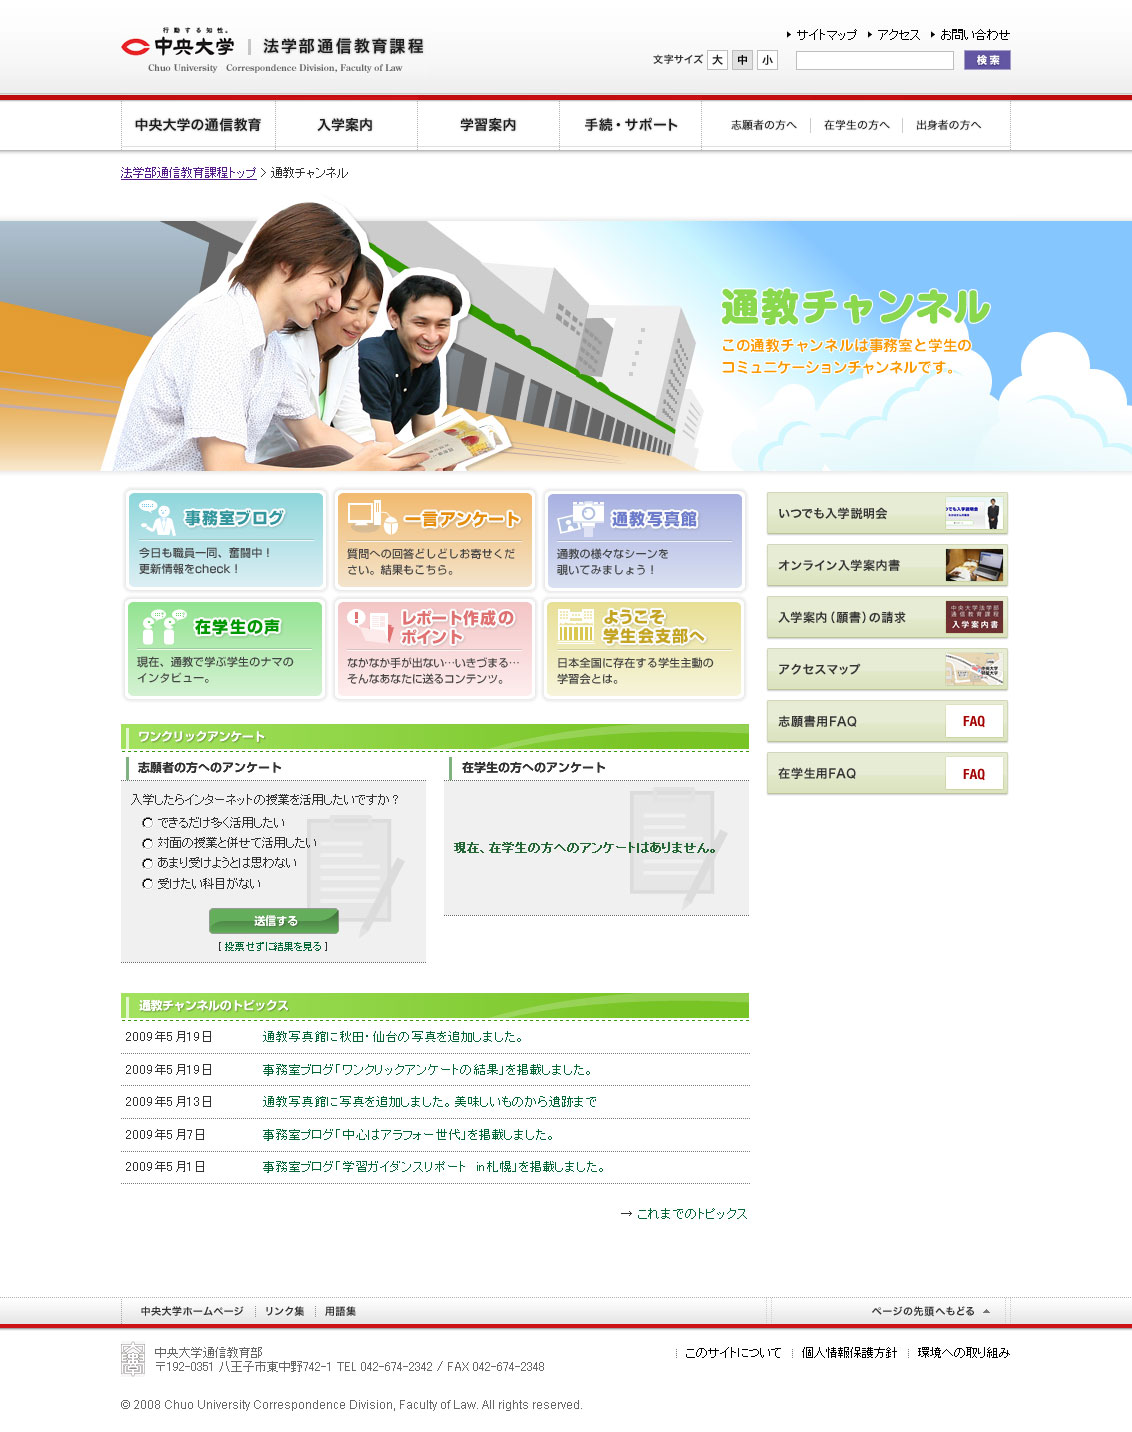 http://www.sixapart.jp/business/chu-dai_tsuukyouchannel.jpg